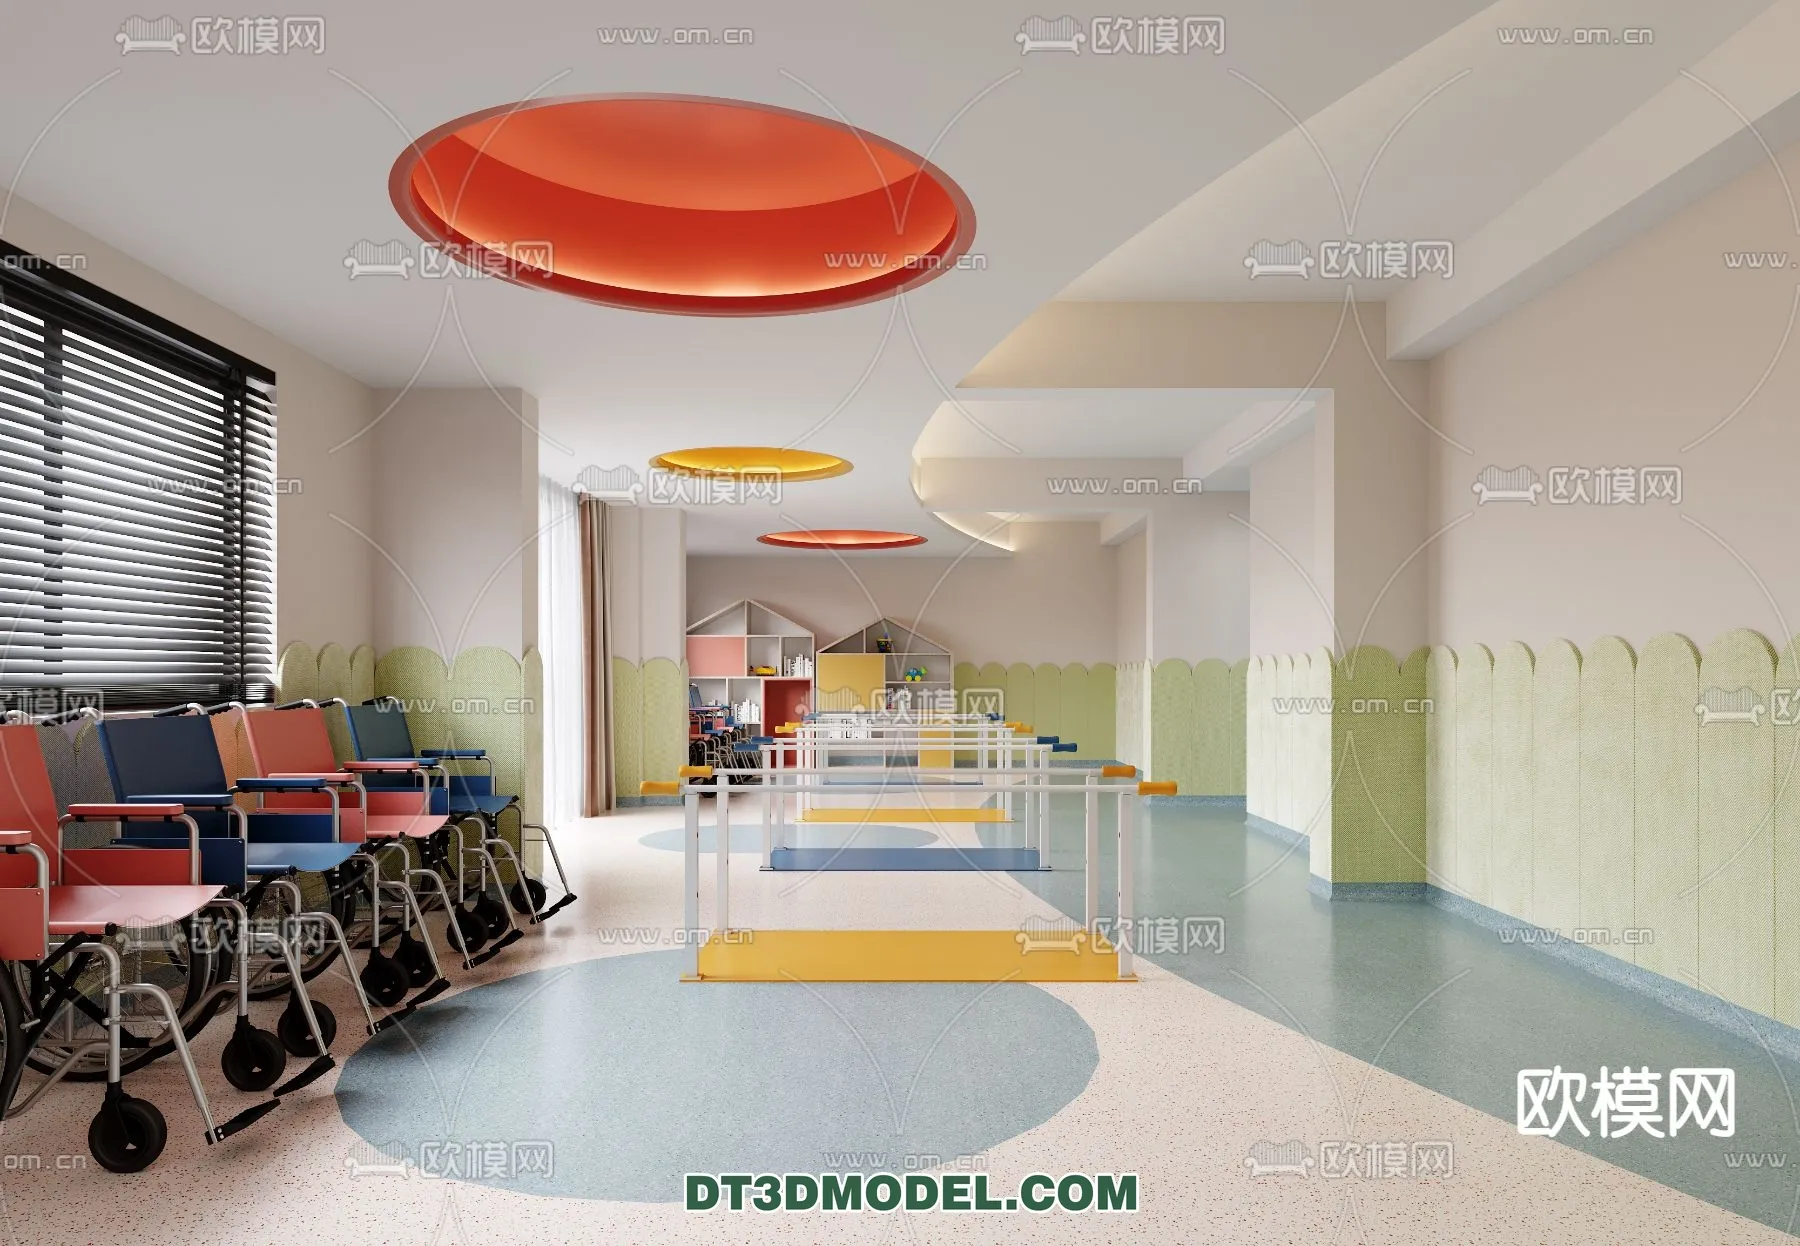 HOSPITAL 3D SCENES – MODERN – 0153